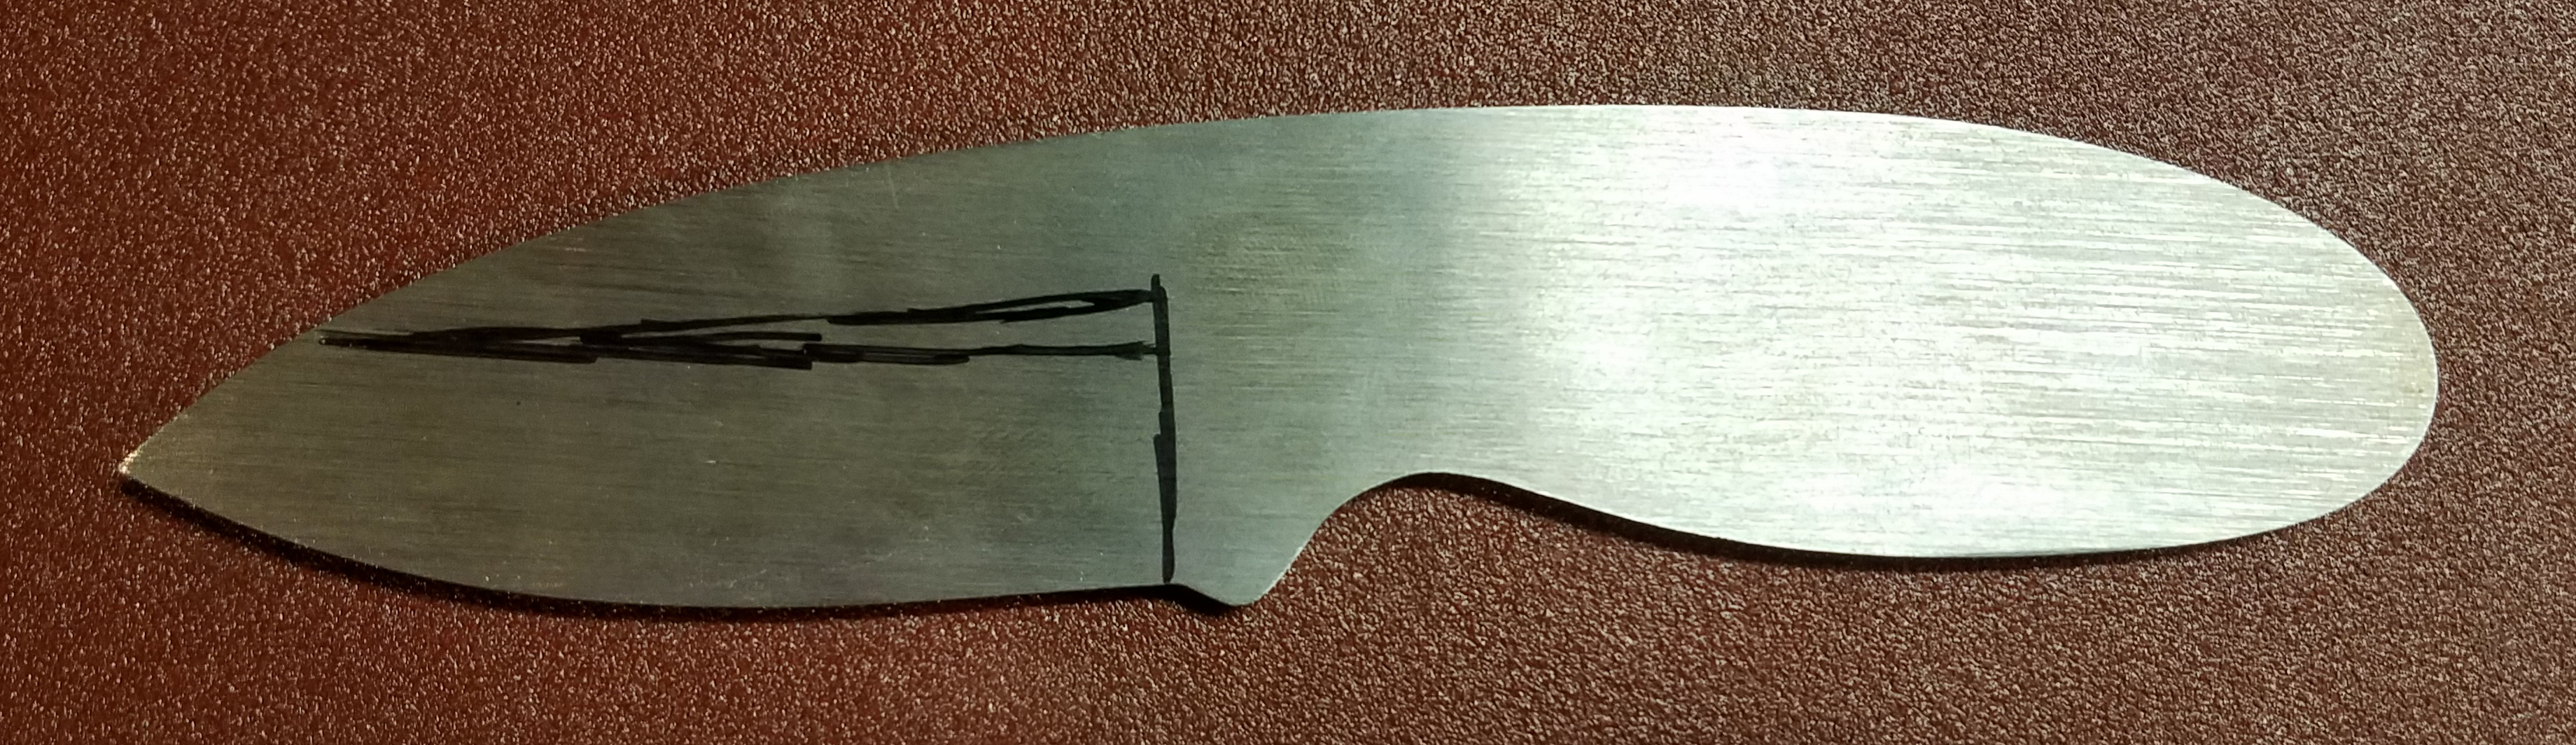 Profiled blade